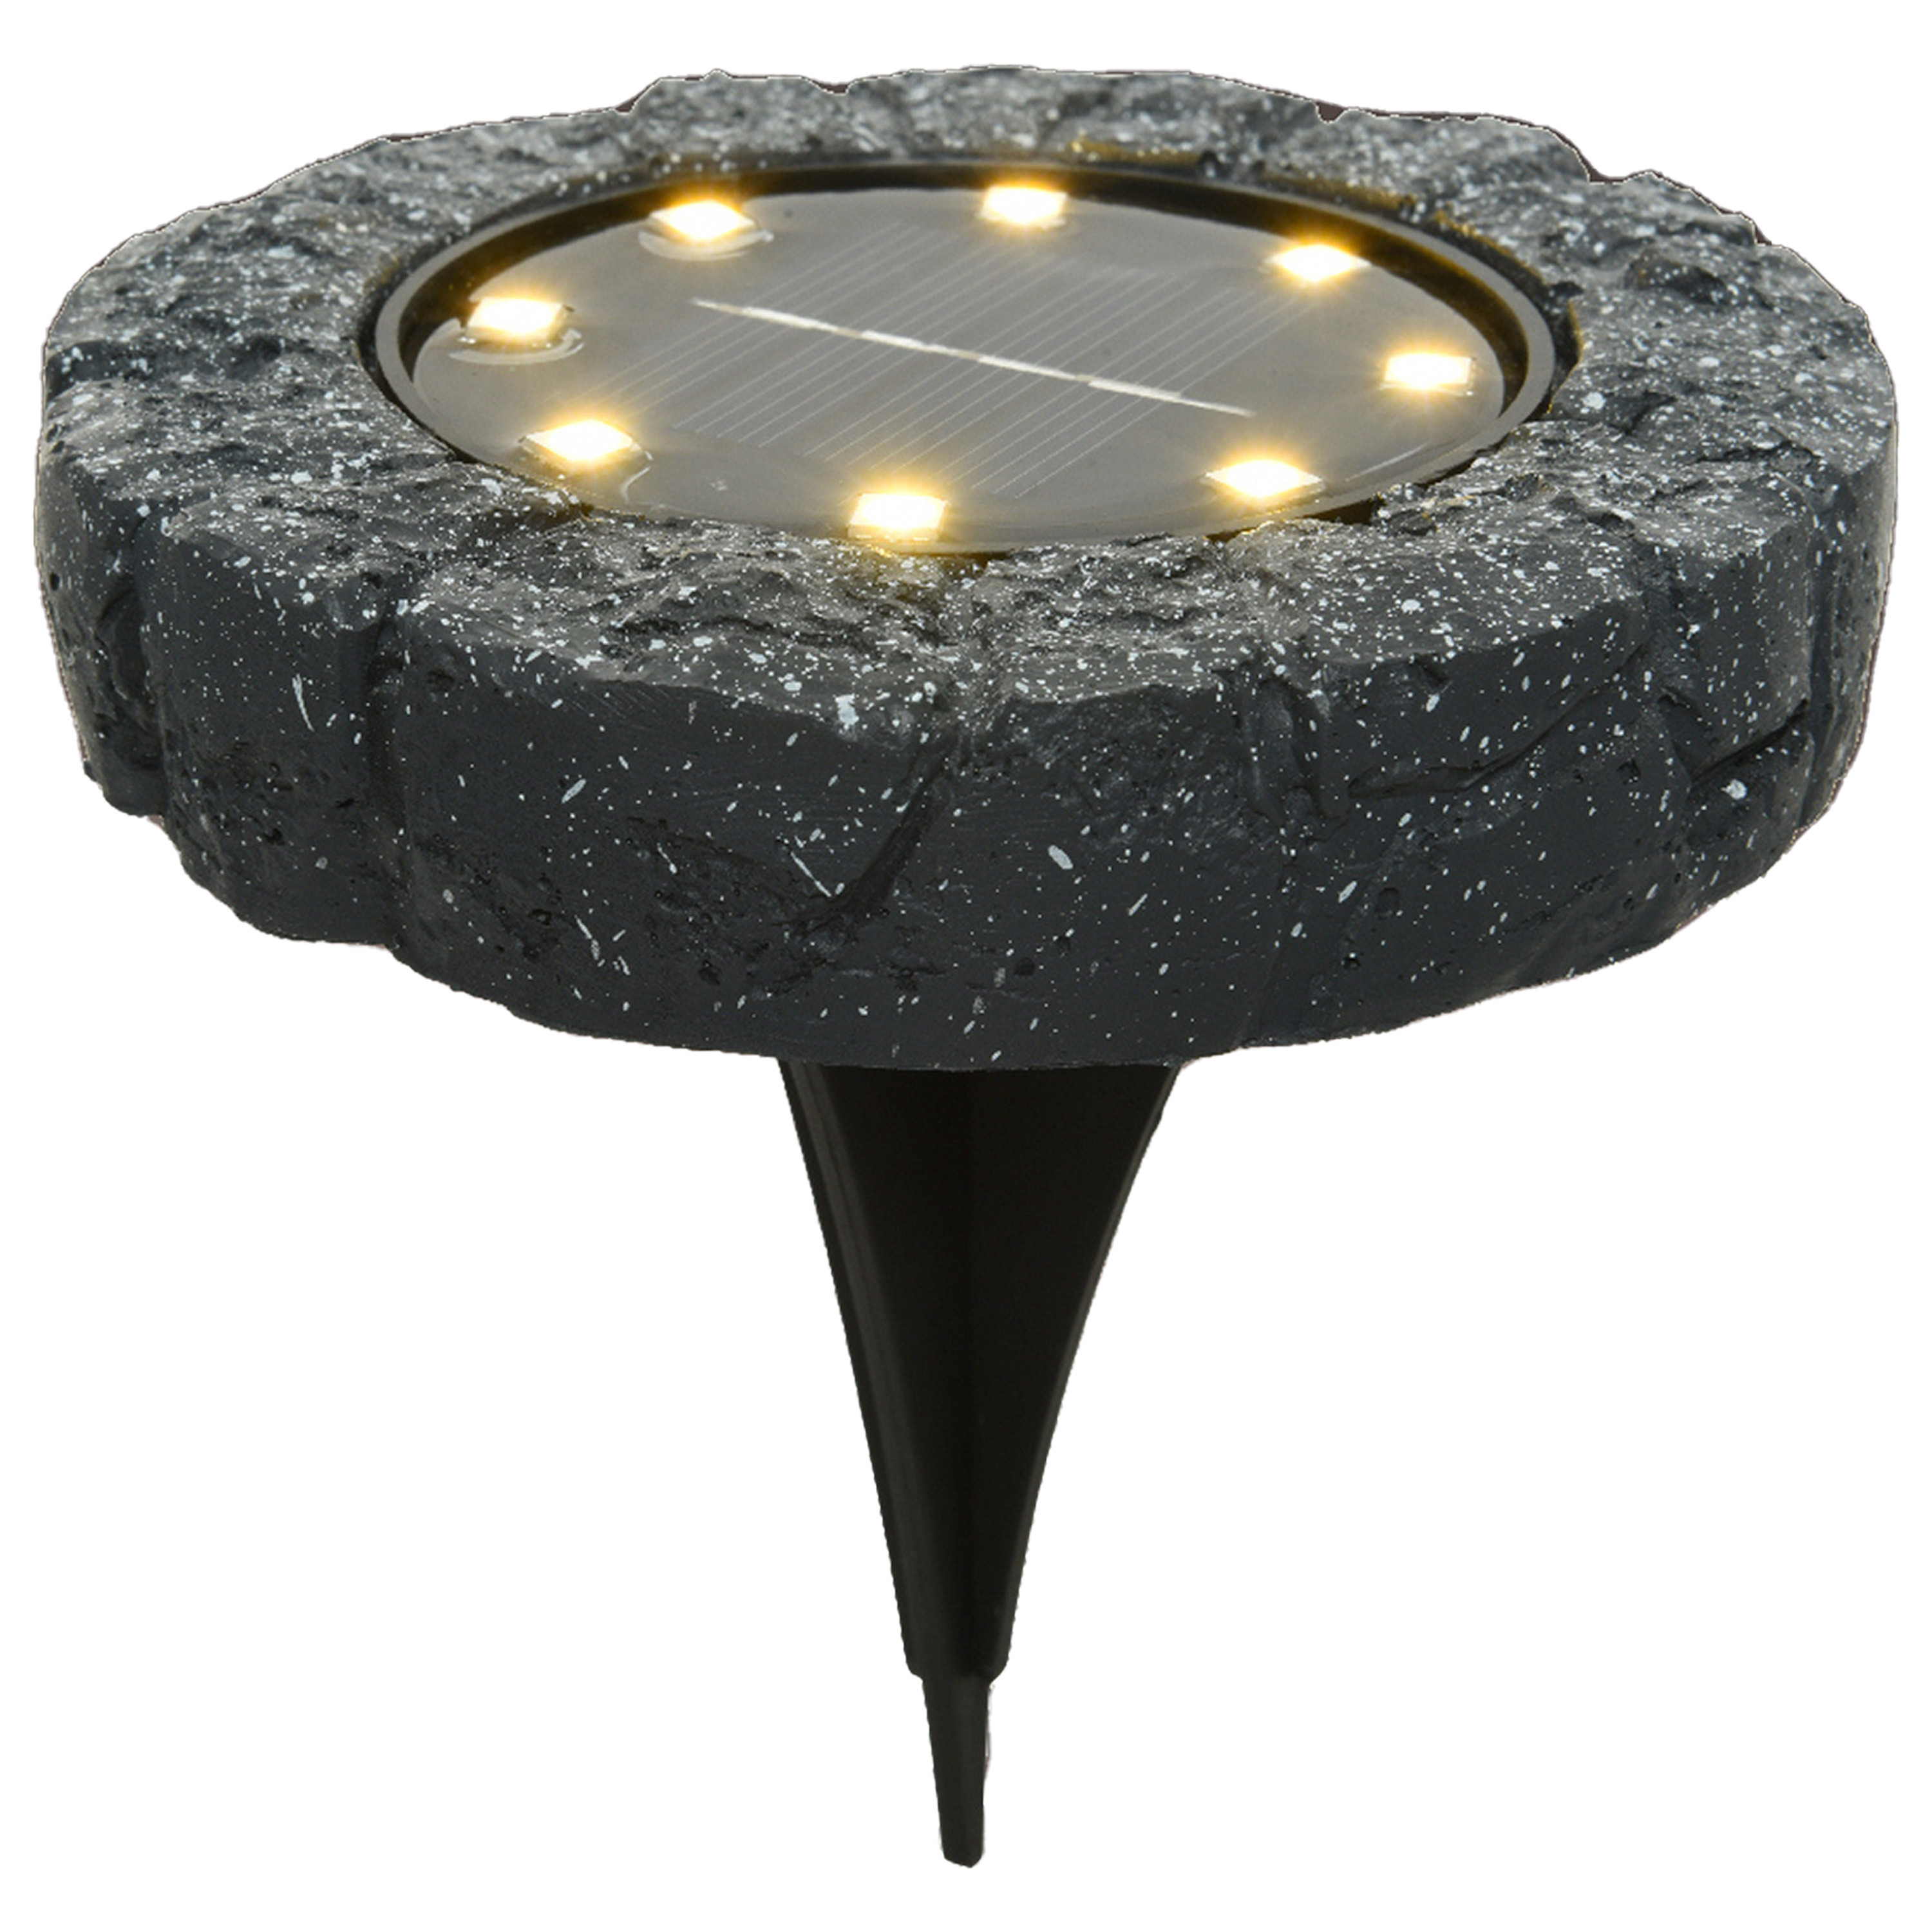 Lumineo Solar grond prikspot/tuinspot led - kunststeen - steengrijs - 11 x 2 cm - warm wit -